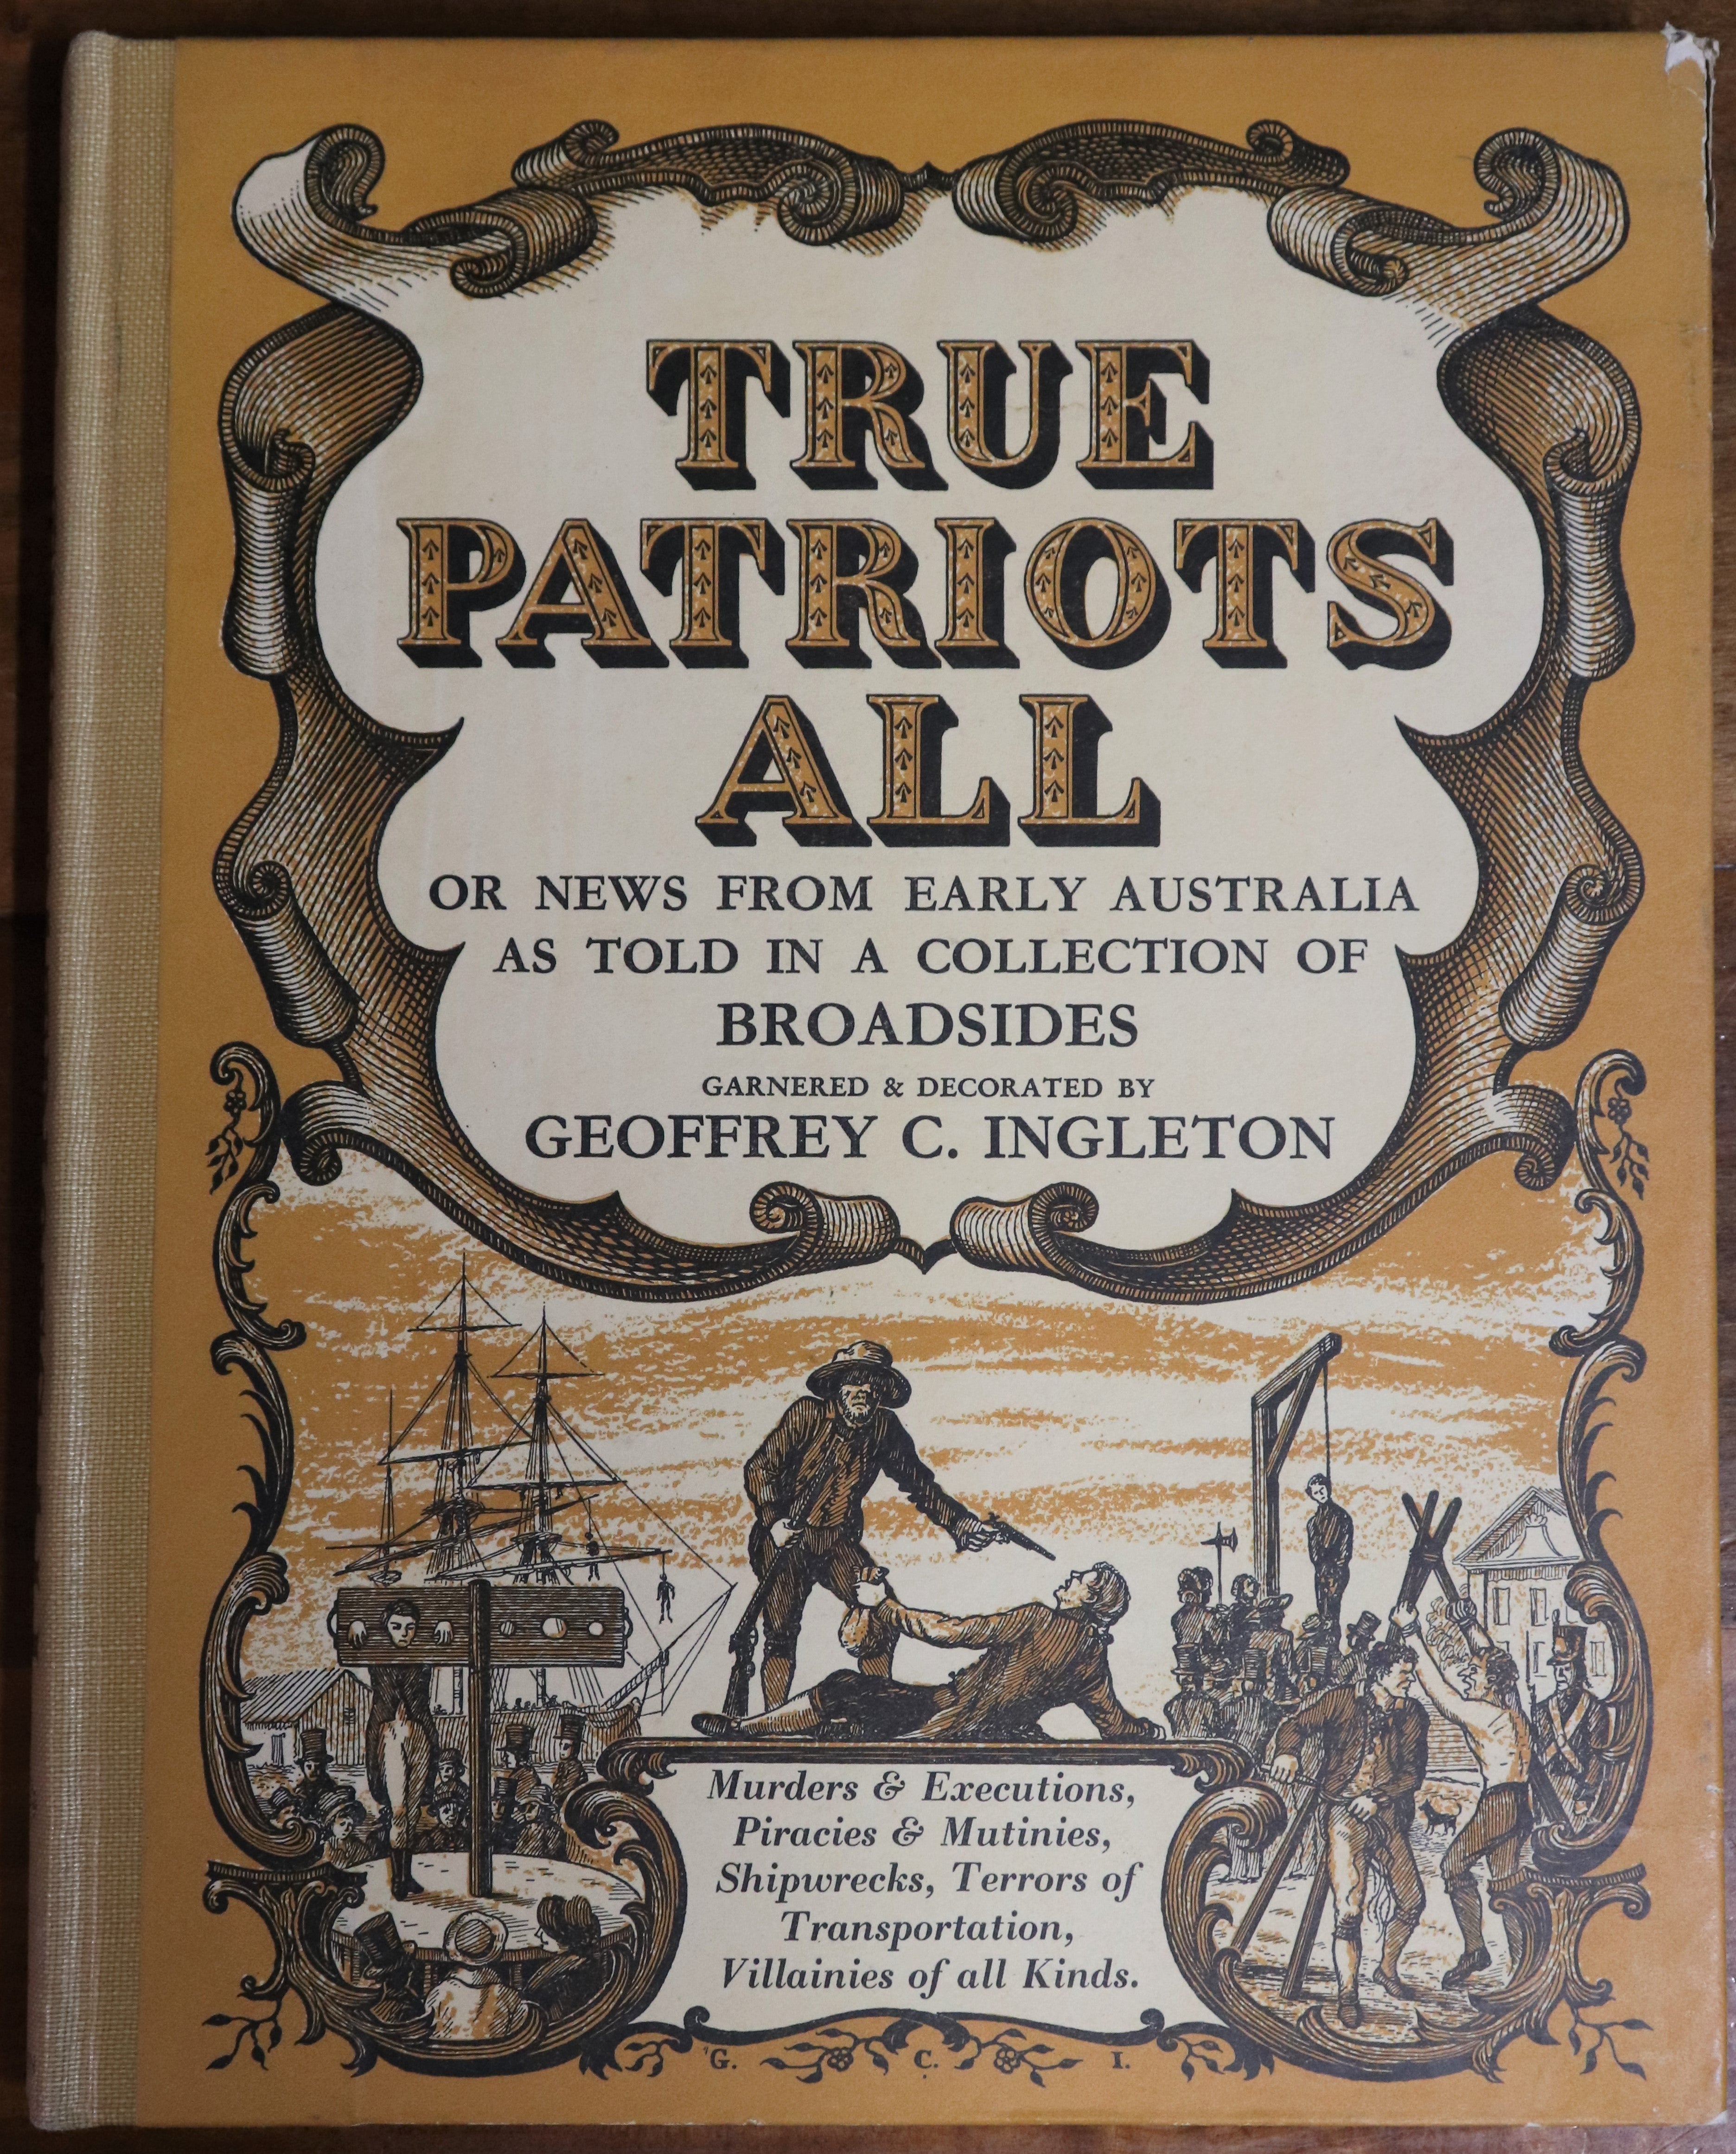 True Patriots All by Geoffrey Ingleton - 1952 - 1st Ed. Australian History Book